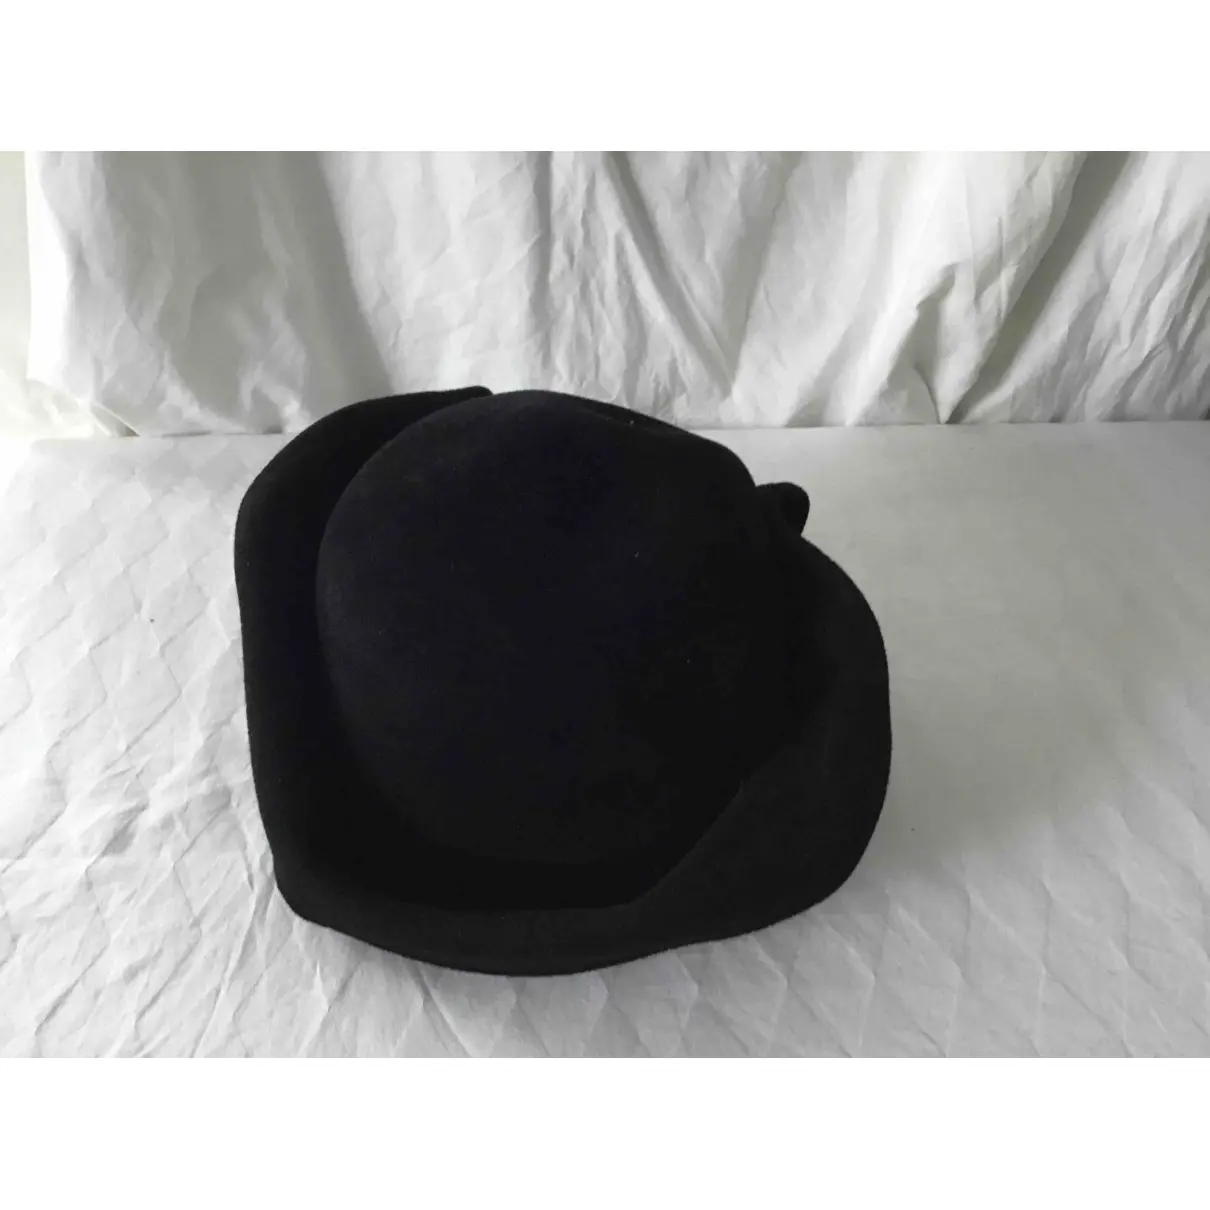 Celine Robert Wool hat for sale